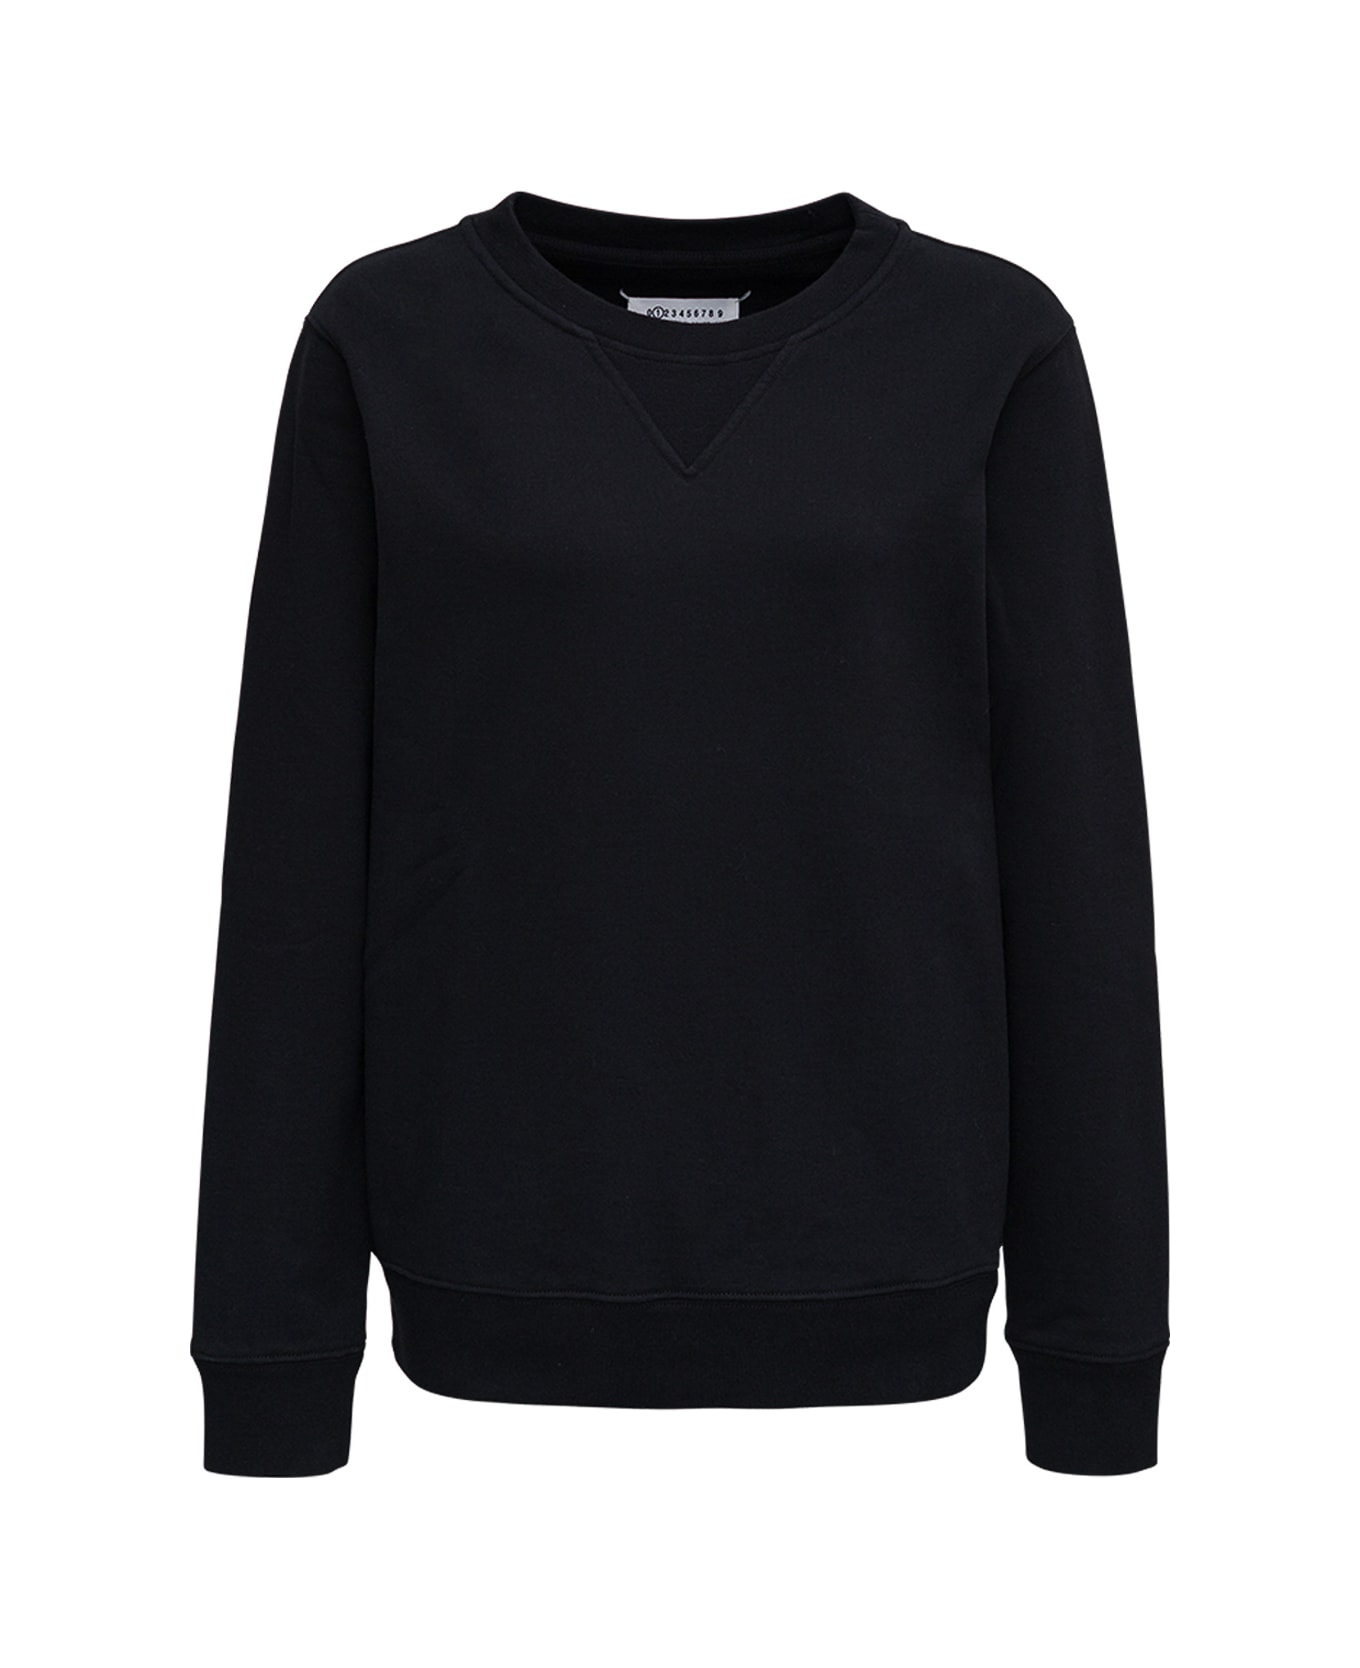 Maison Margiela Black Sweatshirt In Fleece Cotton Mauison Margiela Woman - Black